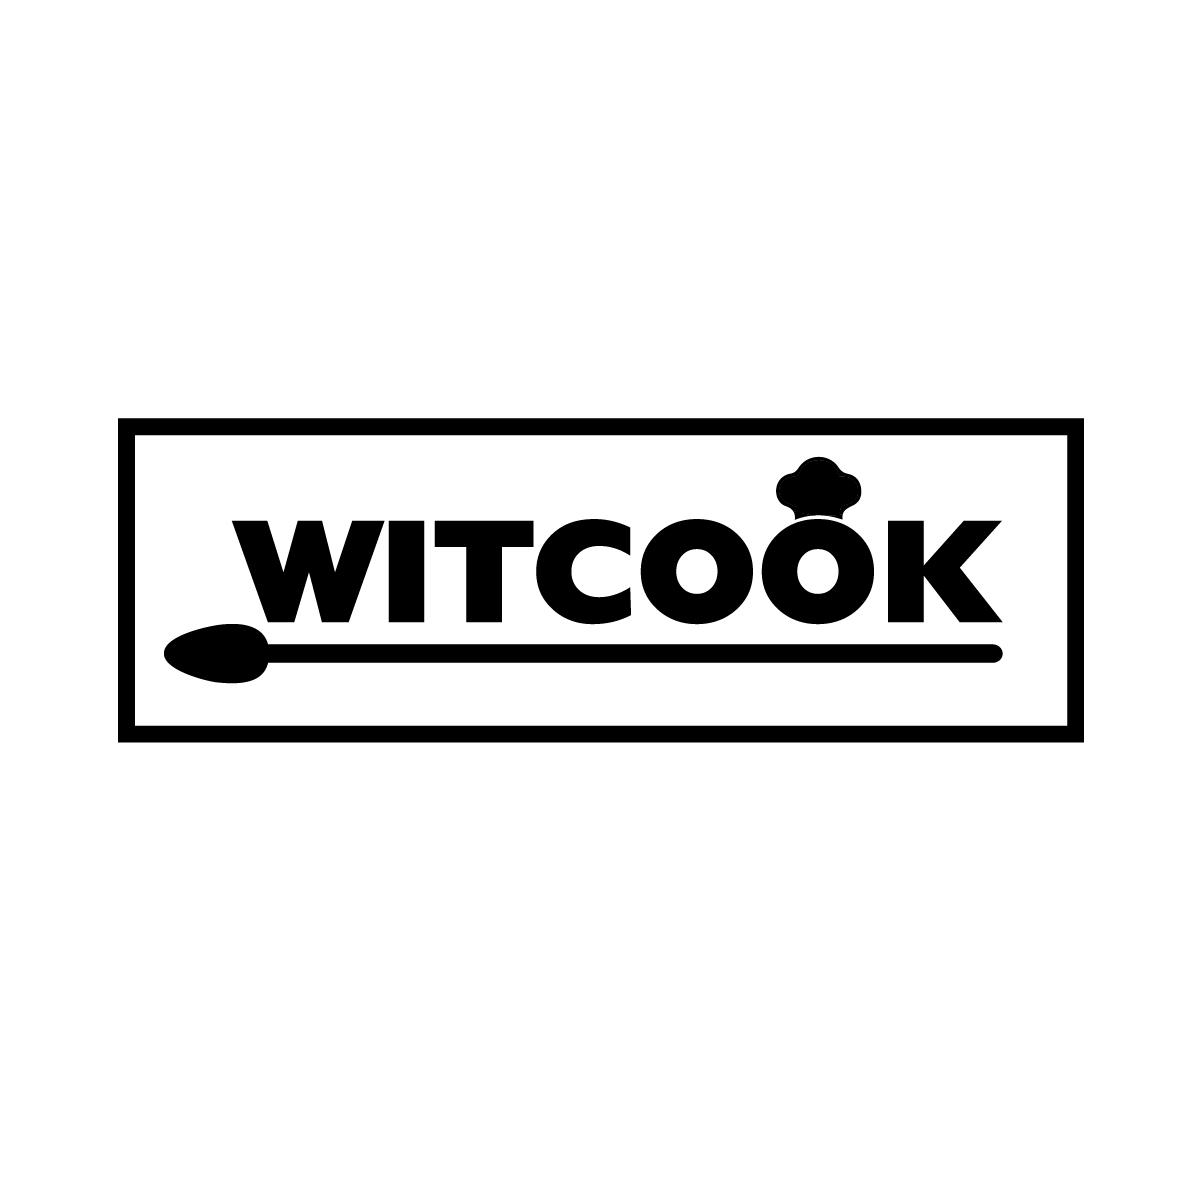 WITCOOK